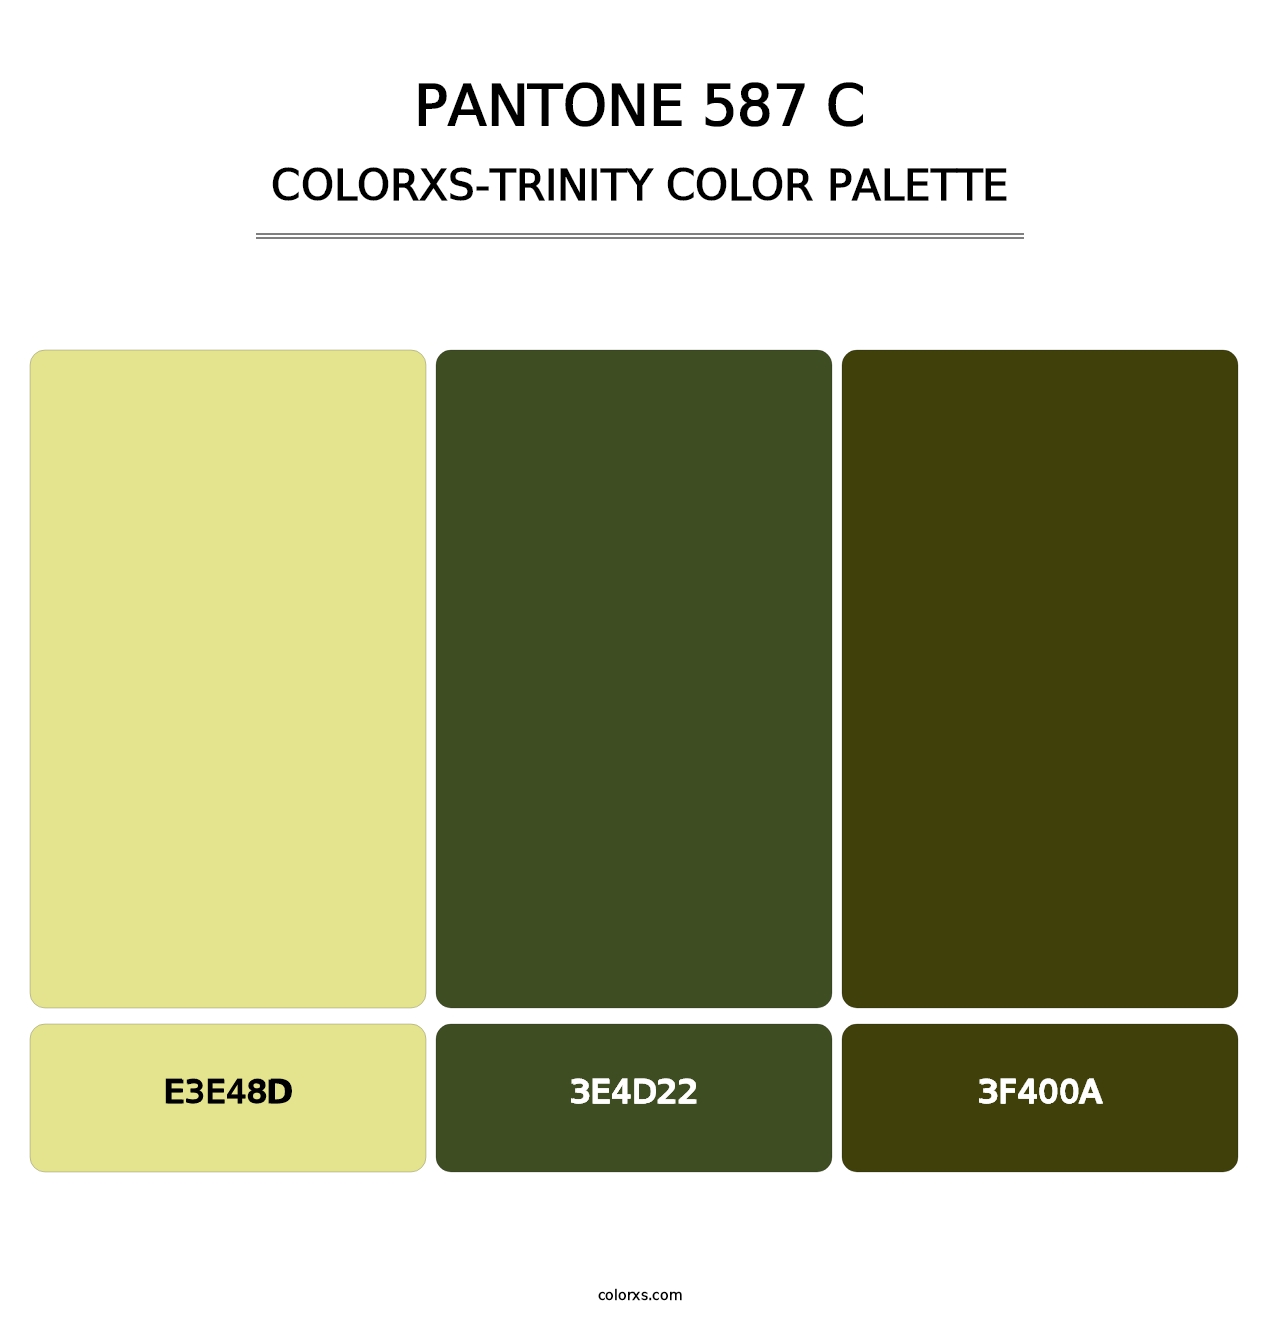 PANTONE 587 C - Colorxs Trinity Palette